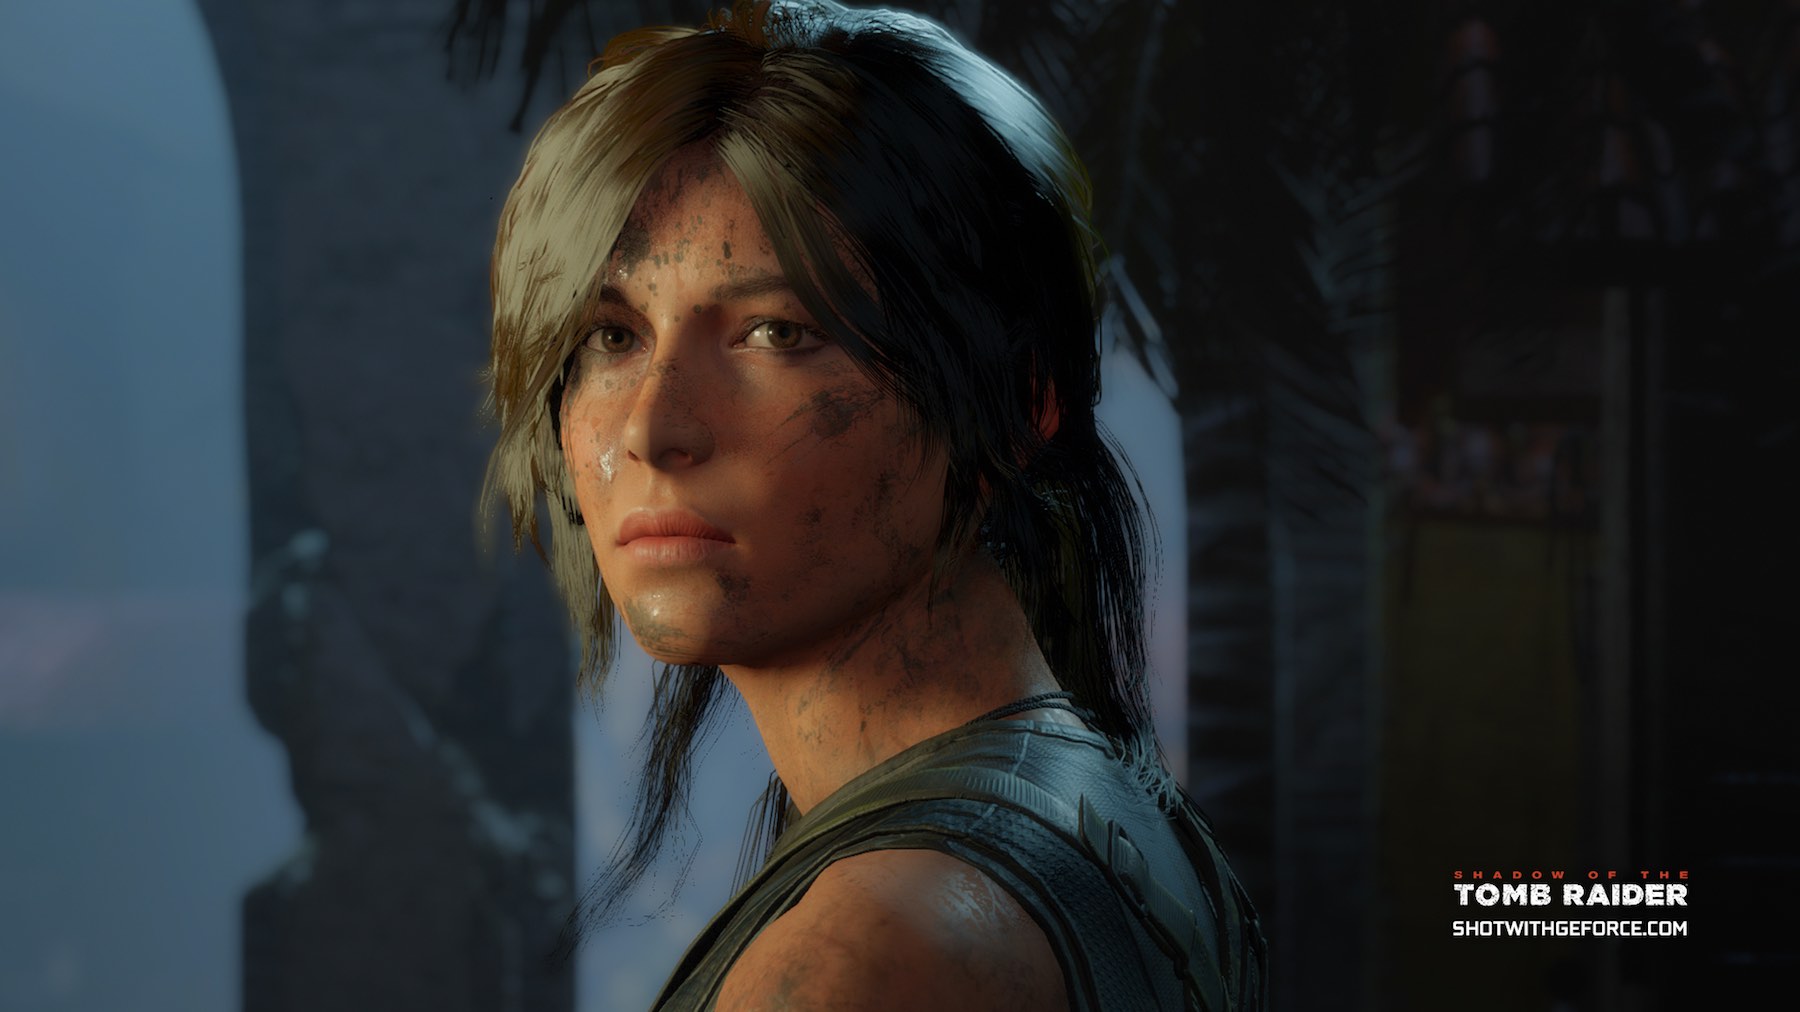 Shadow of the Tomb Raider supporta NVIDIA Ansel e Highlights